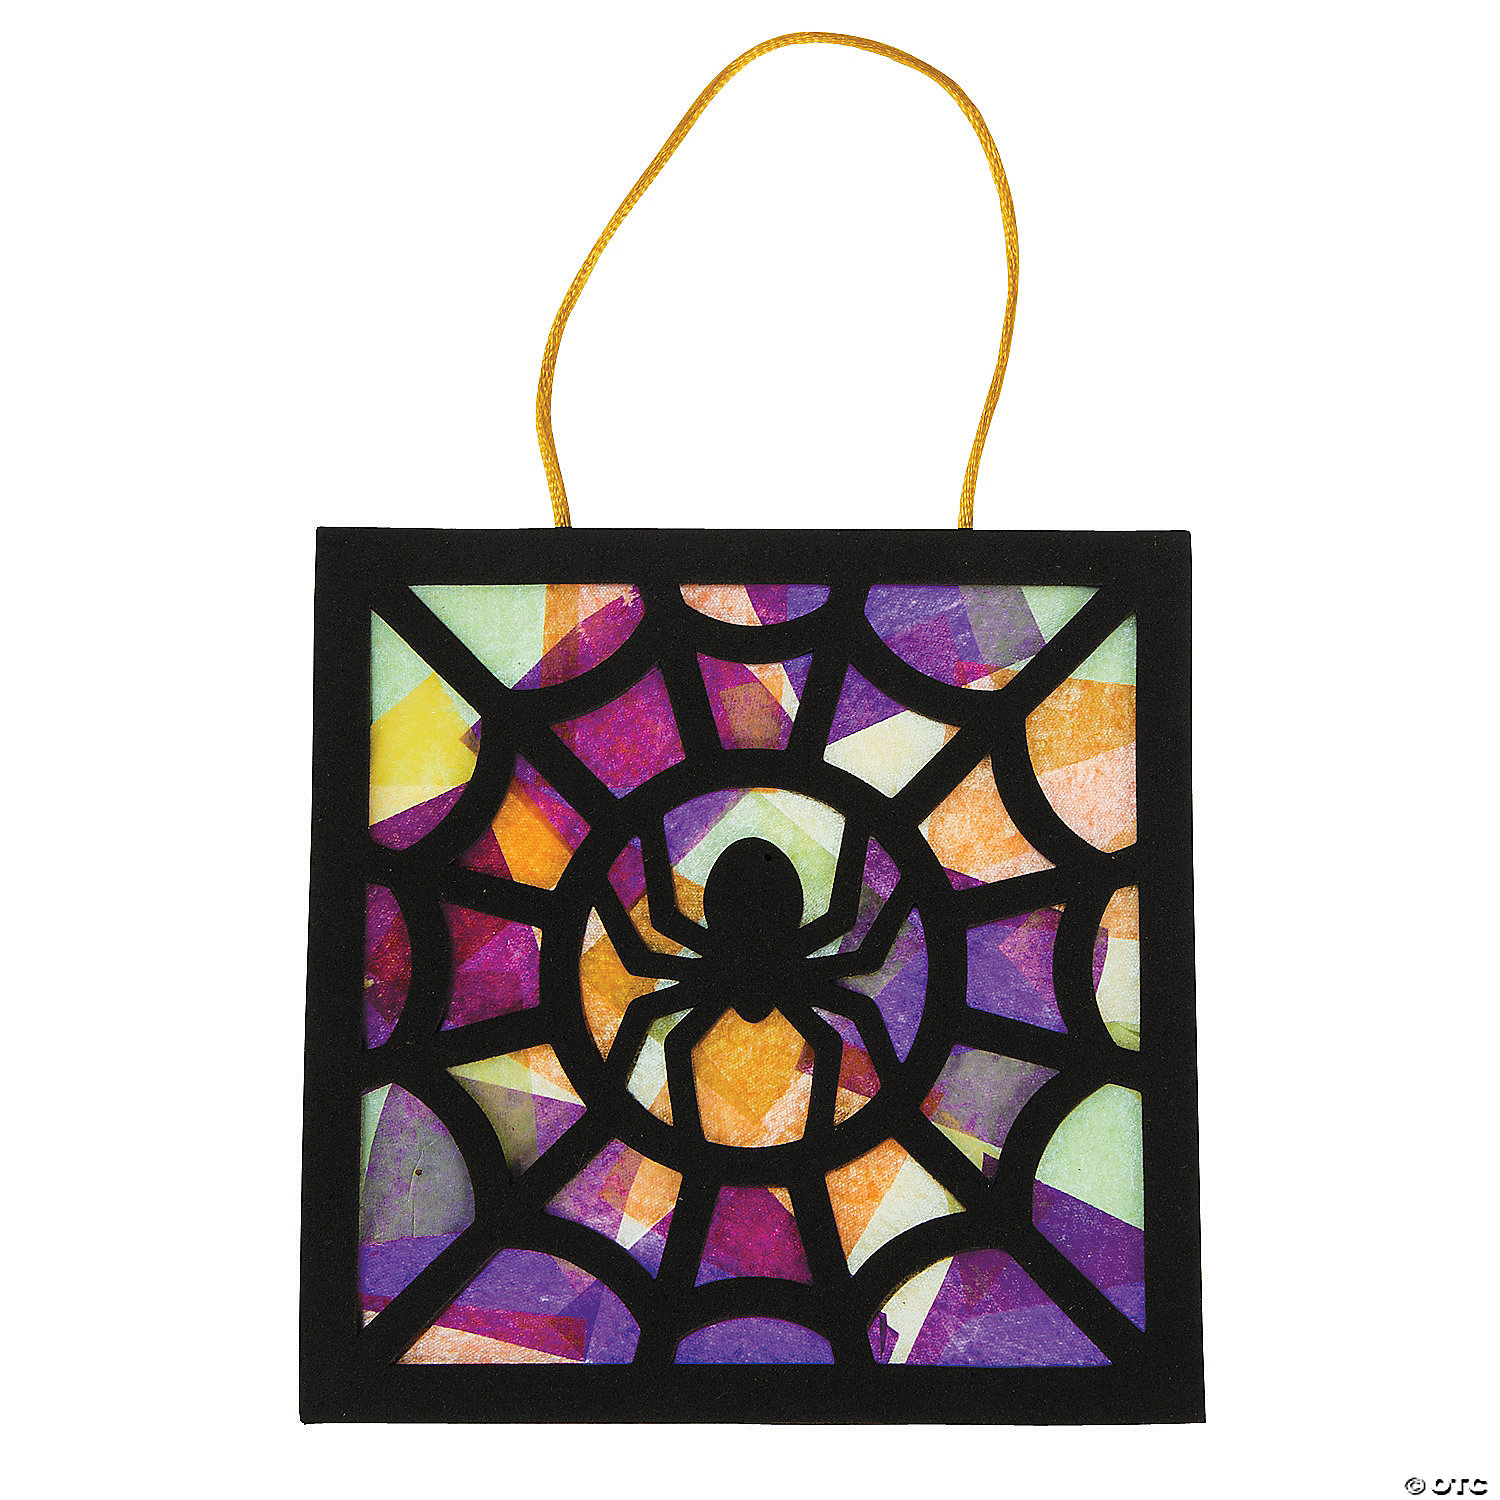 https://www.orientaltrading.com/tissue-paper-black-spider-craft-kit-makes-12-a2-13605270.fltr?categoryId=550055+1237&rd=halloween%20crafts